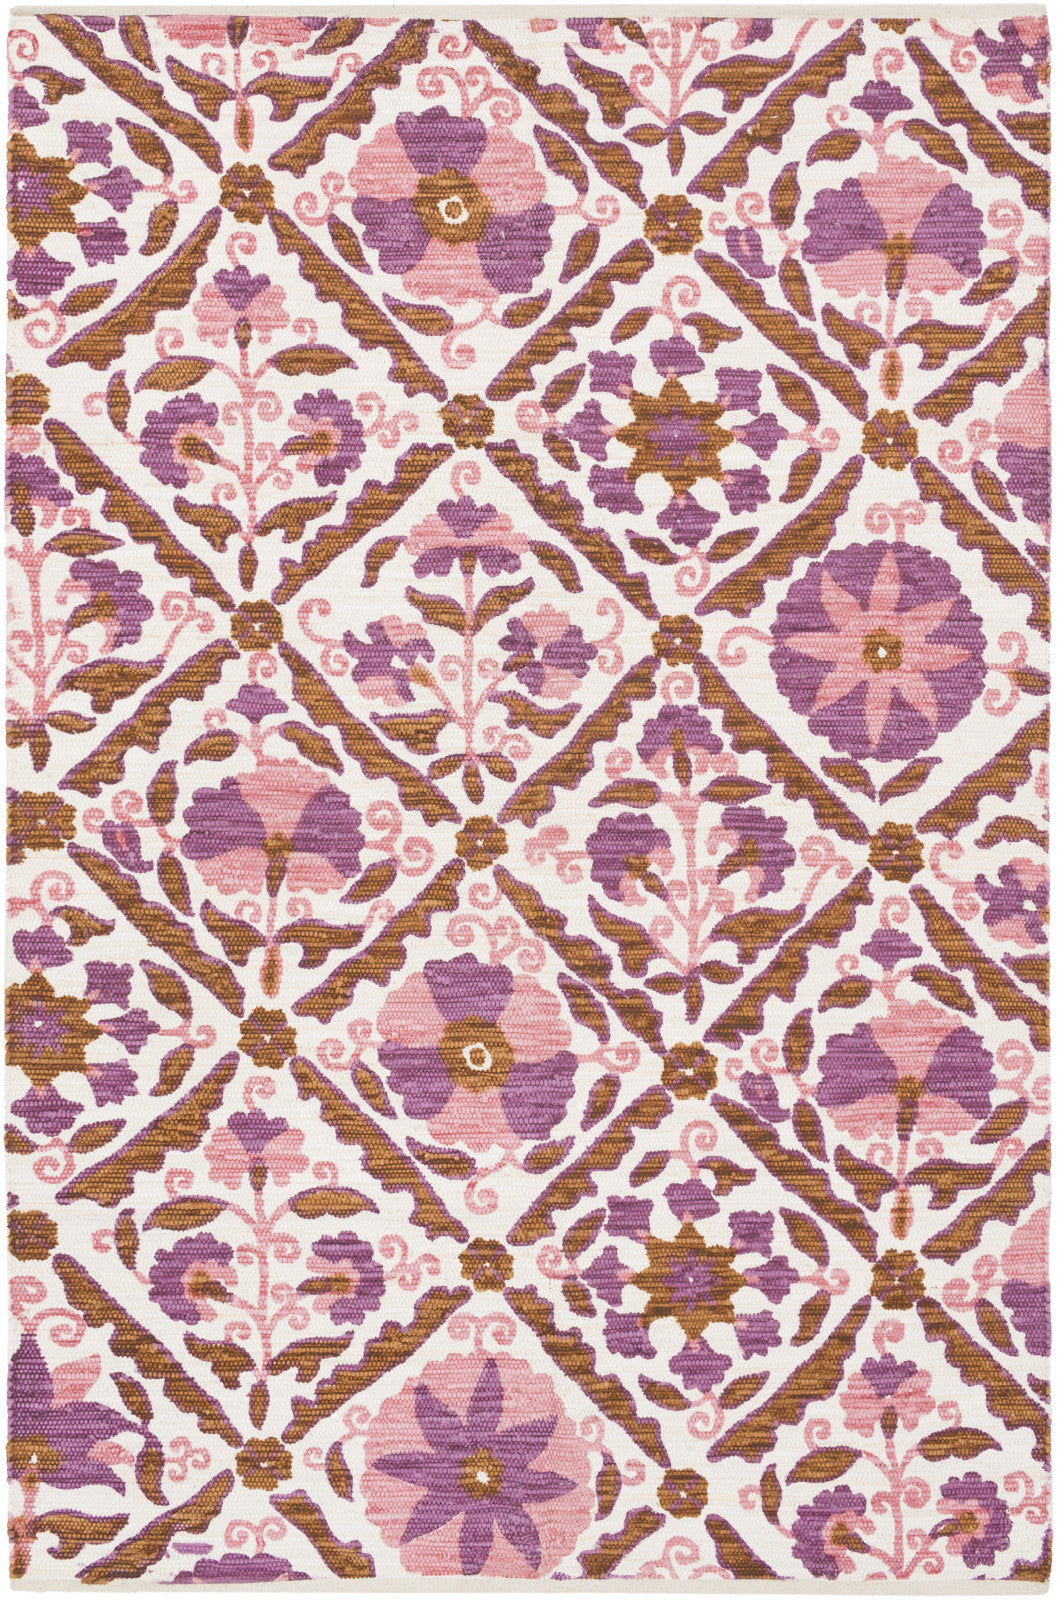 Artistic Weavers Elaine Gavin Magenta/Carnation Pink Multi Area Rug main image